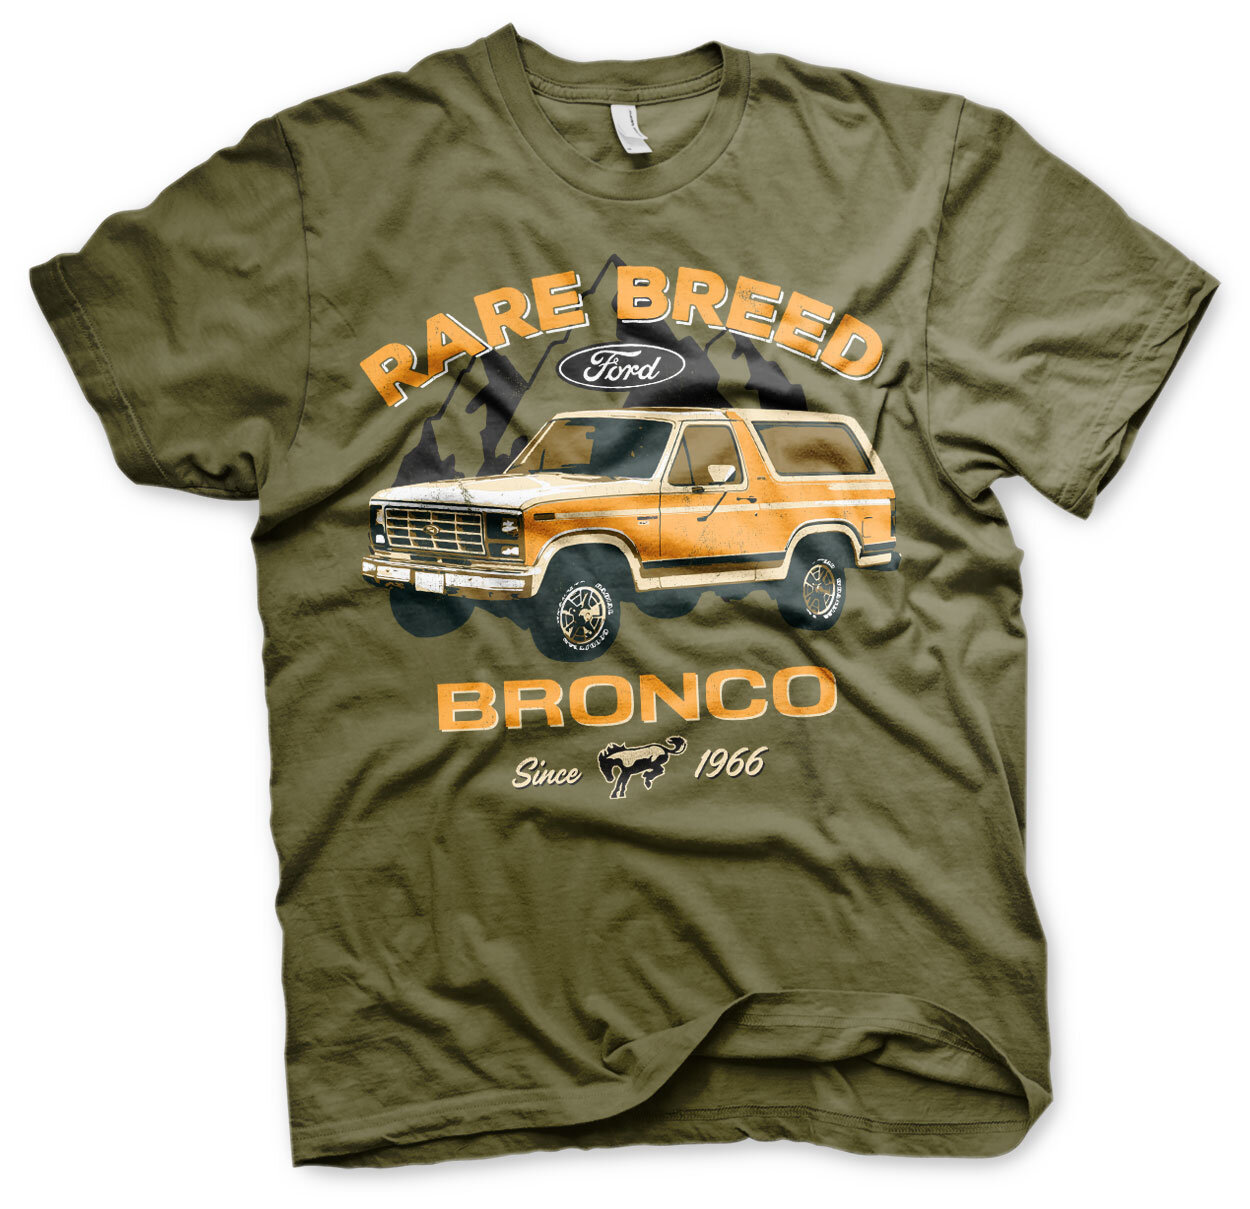 Ford Bronco - Rare Breed T-Shirt